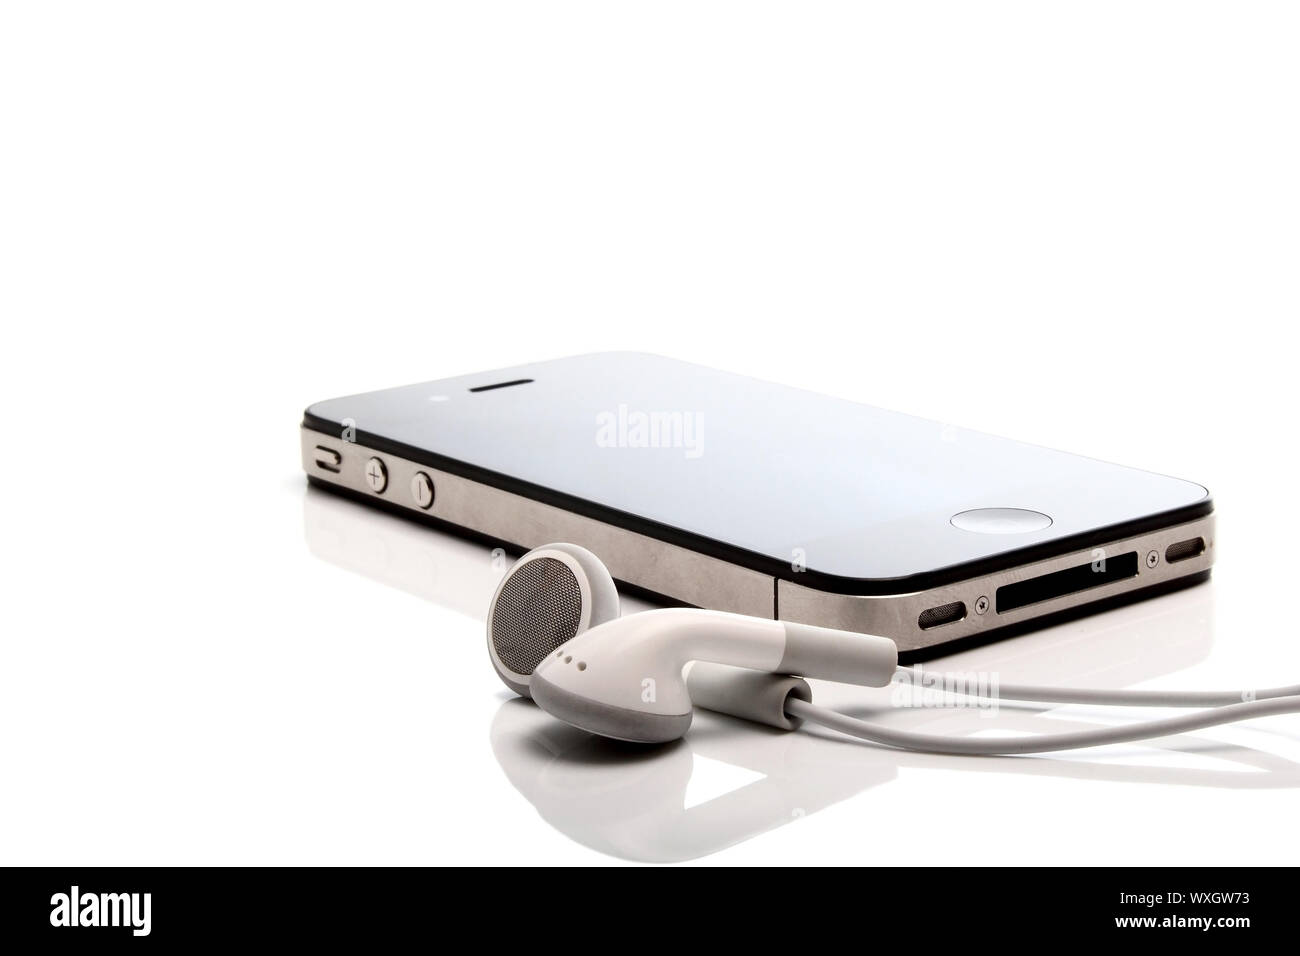 Iphone 4S and earphones Stock Photo